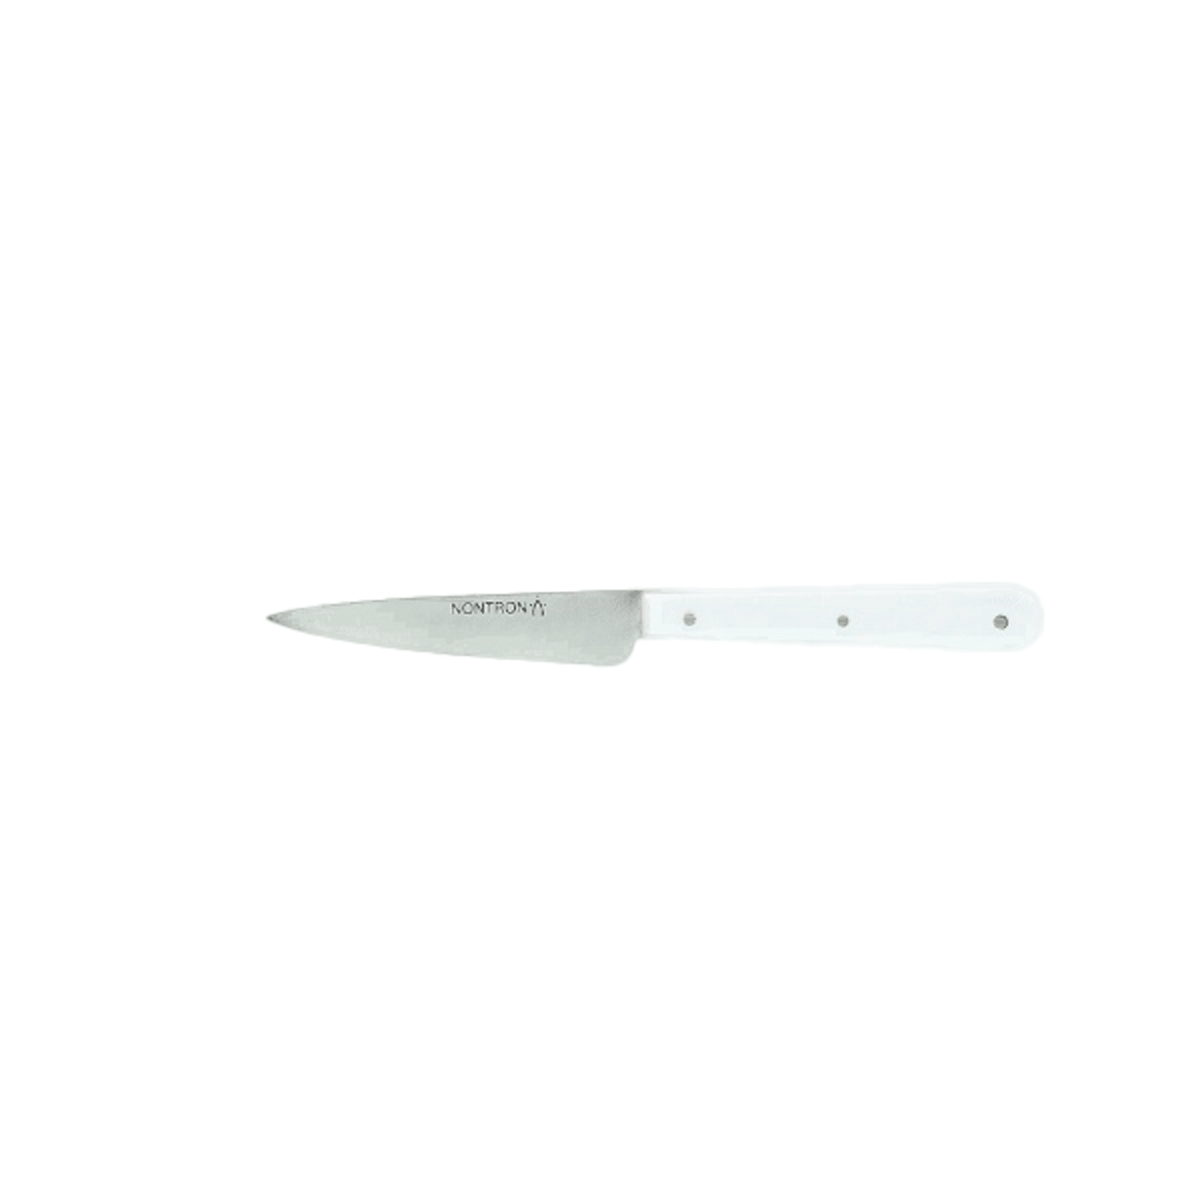 Buy Premium Knives & Cutlery online